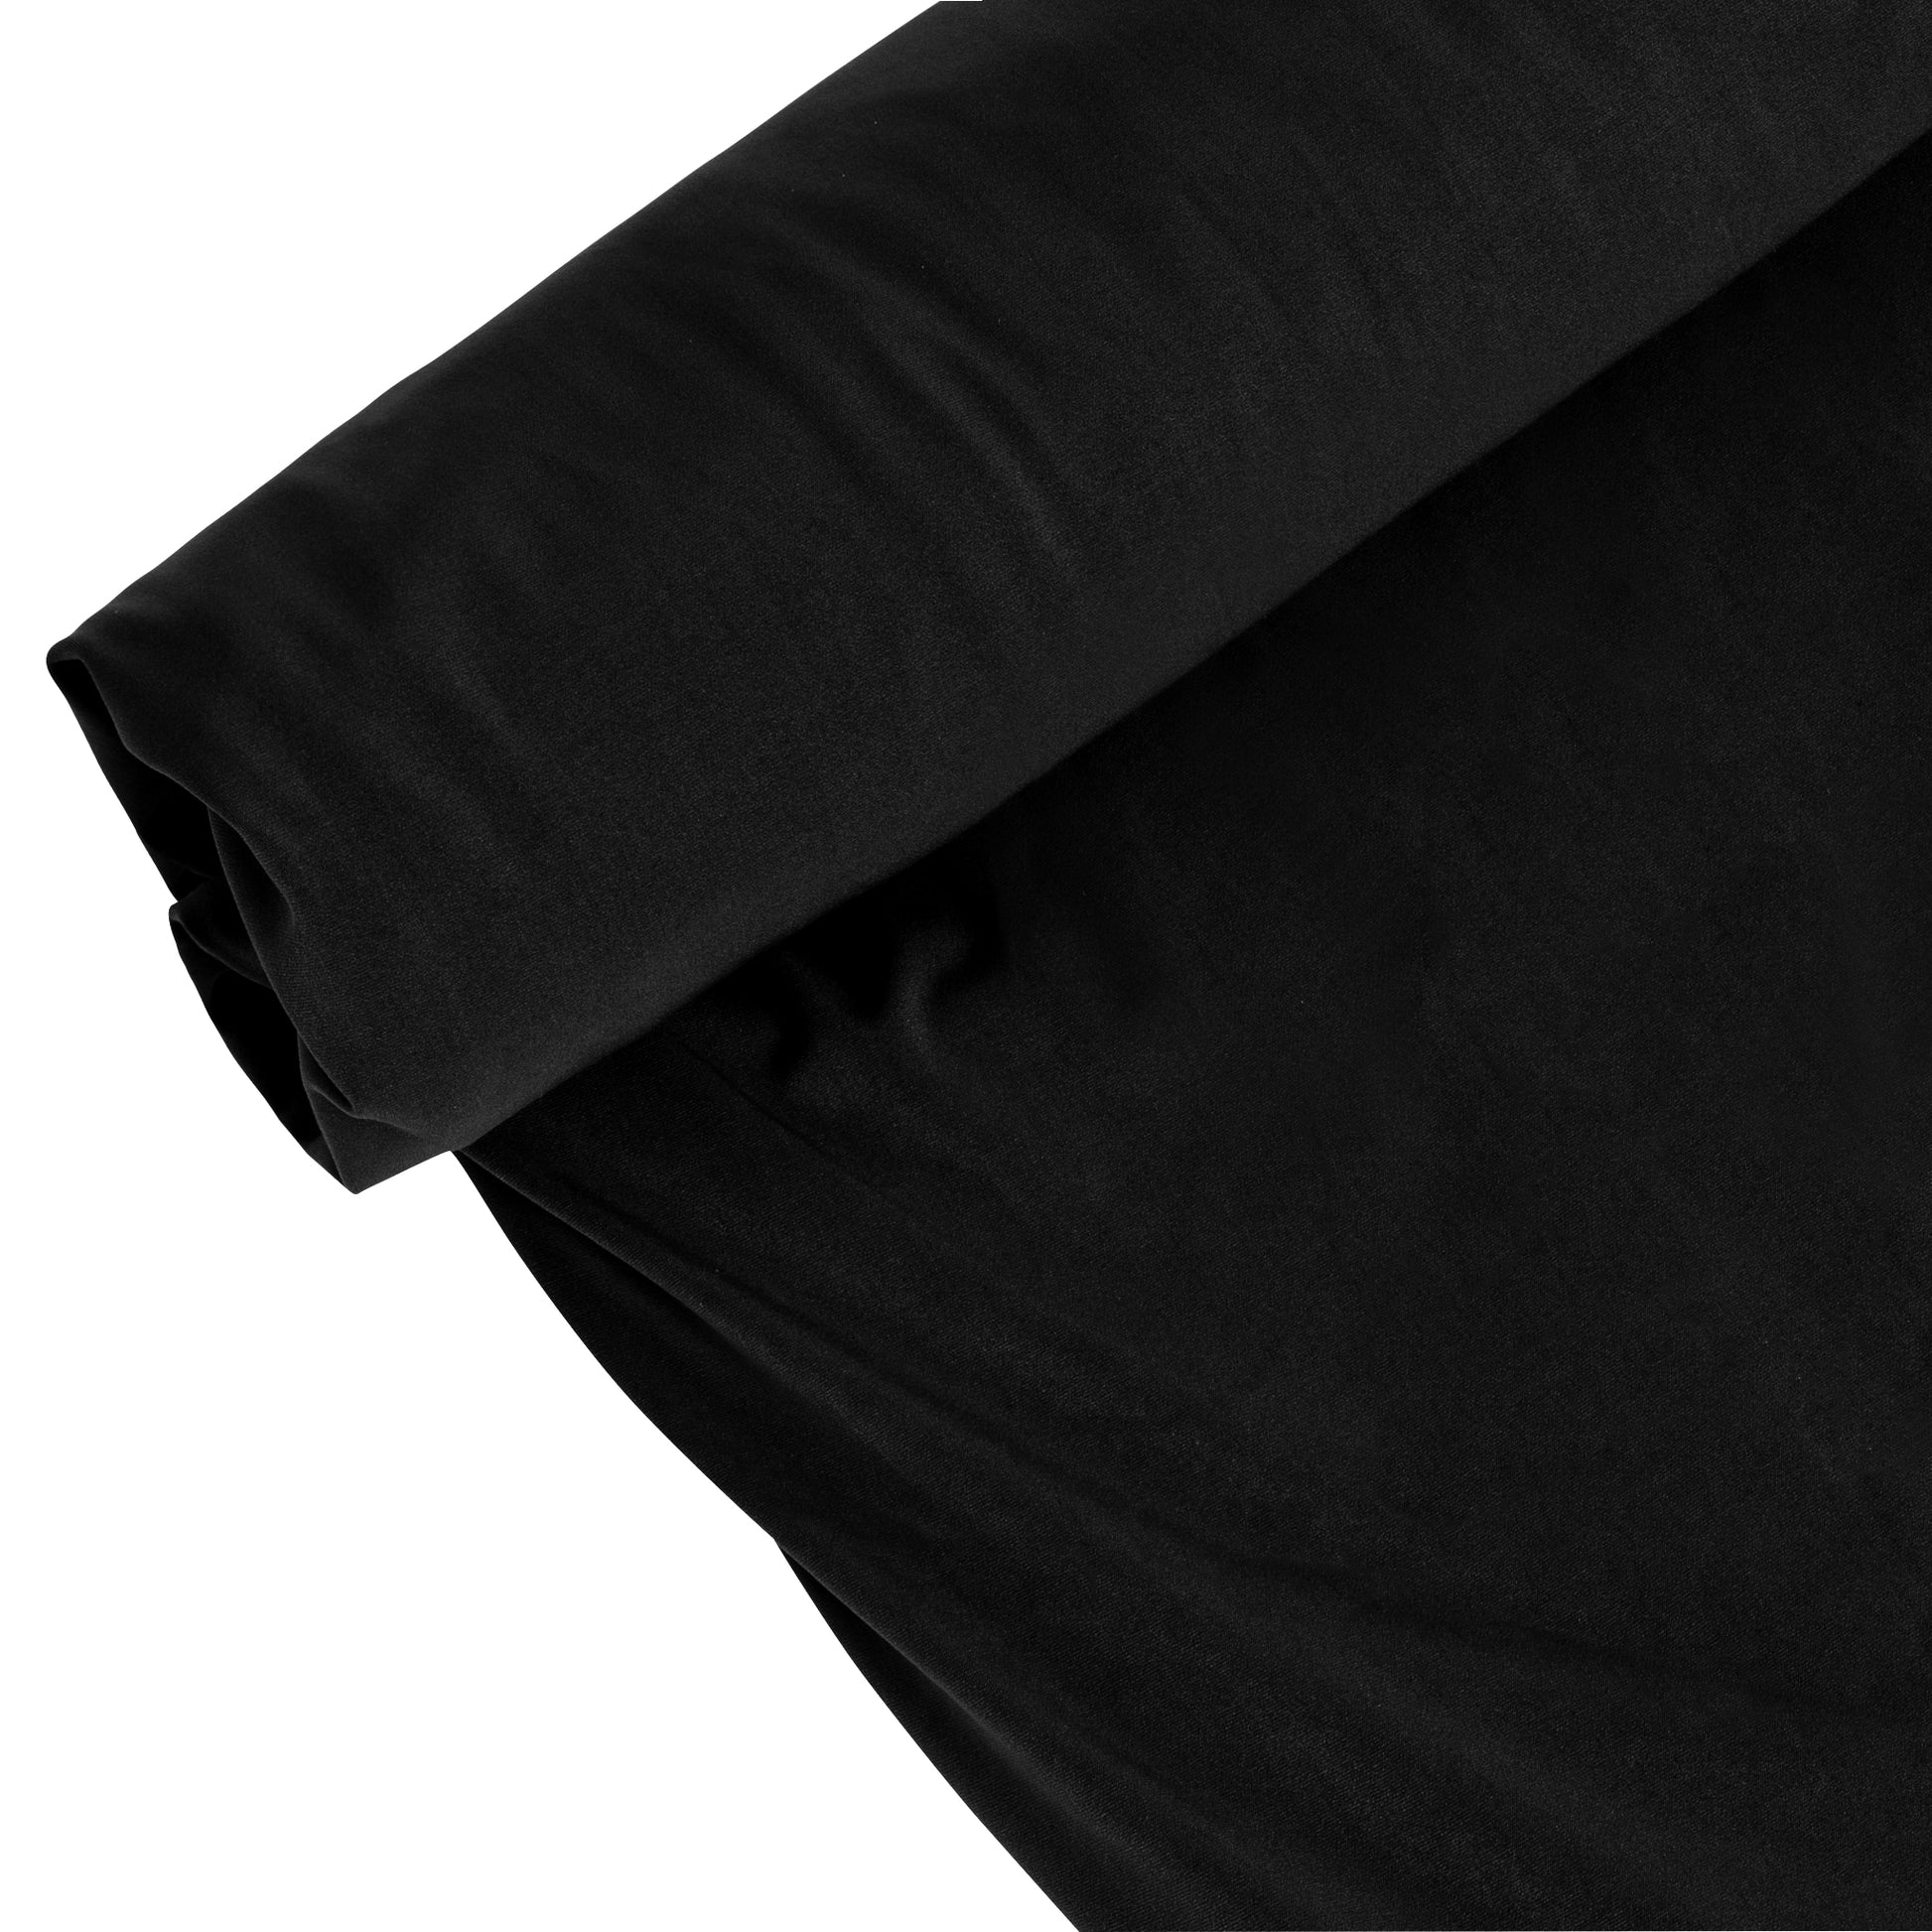 Cotton/Lycra Black - Cotton Fabric